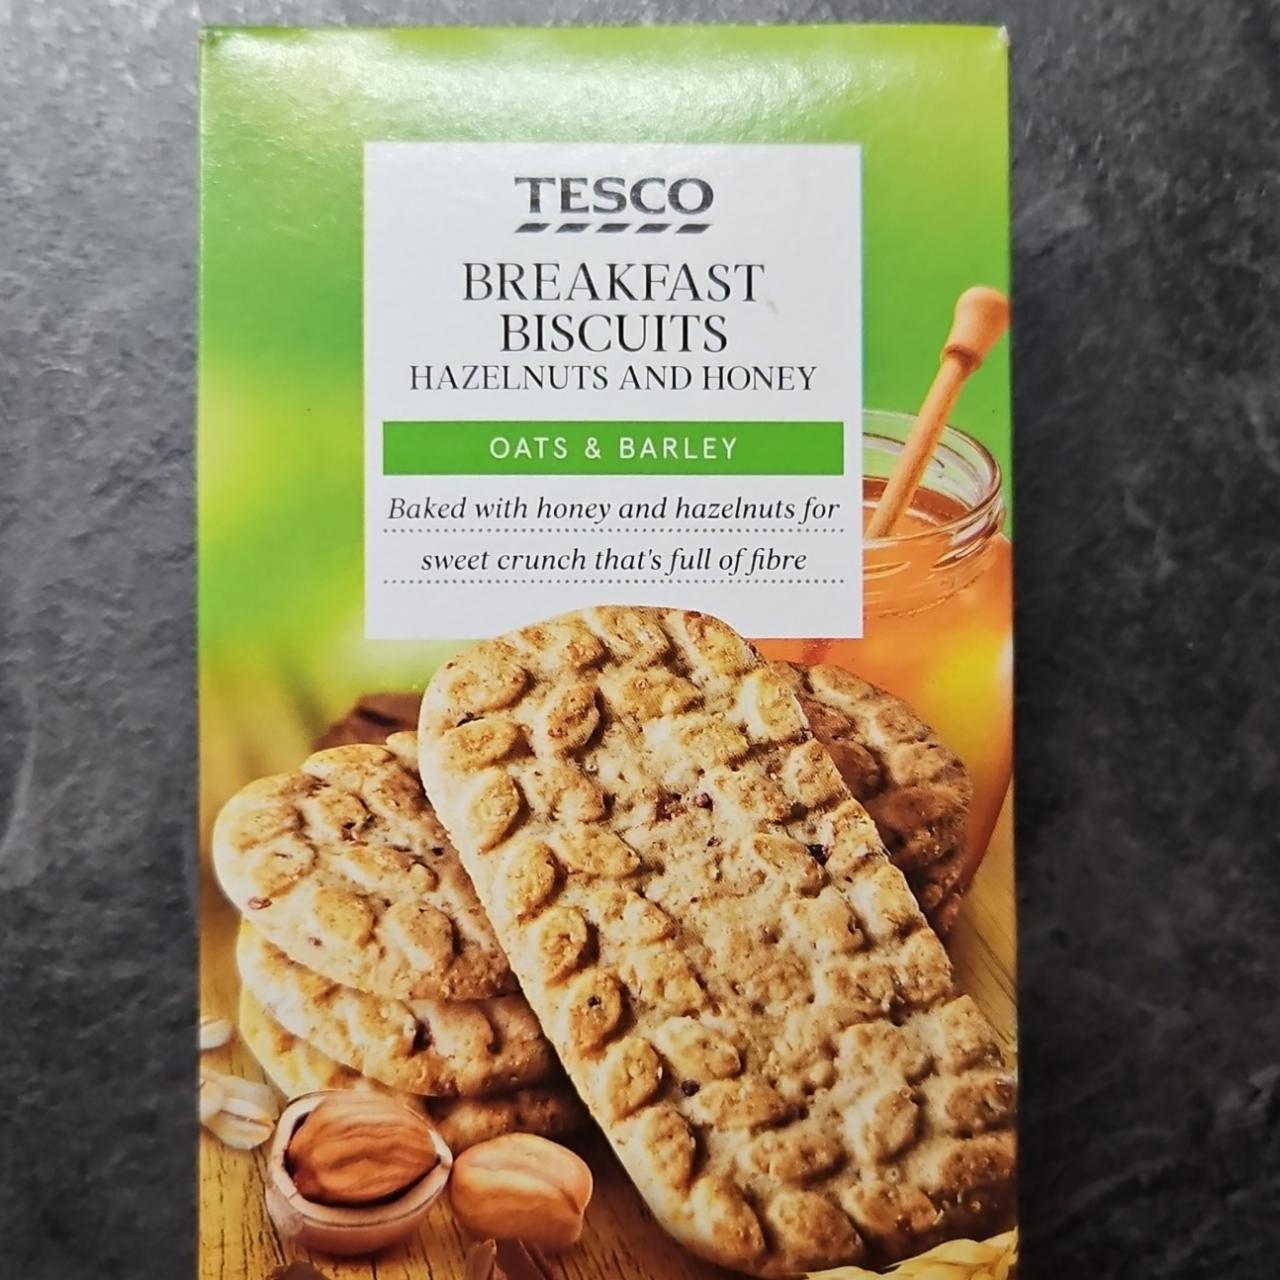 Képek - Breakfast Biscuits hazelnuts and honey Tesco